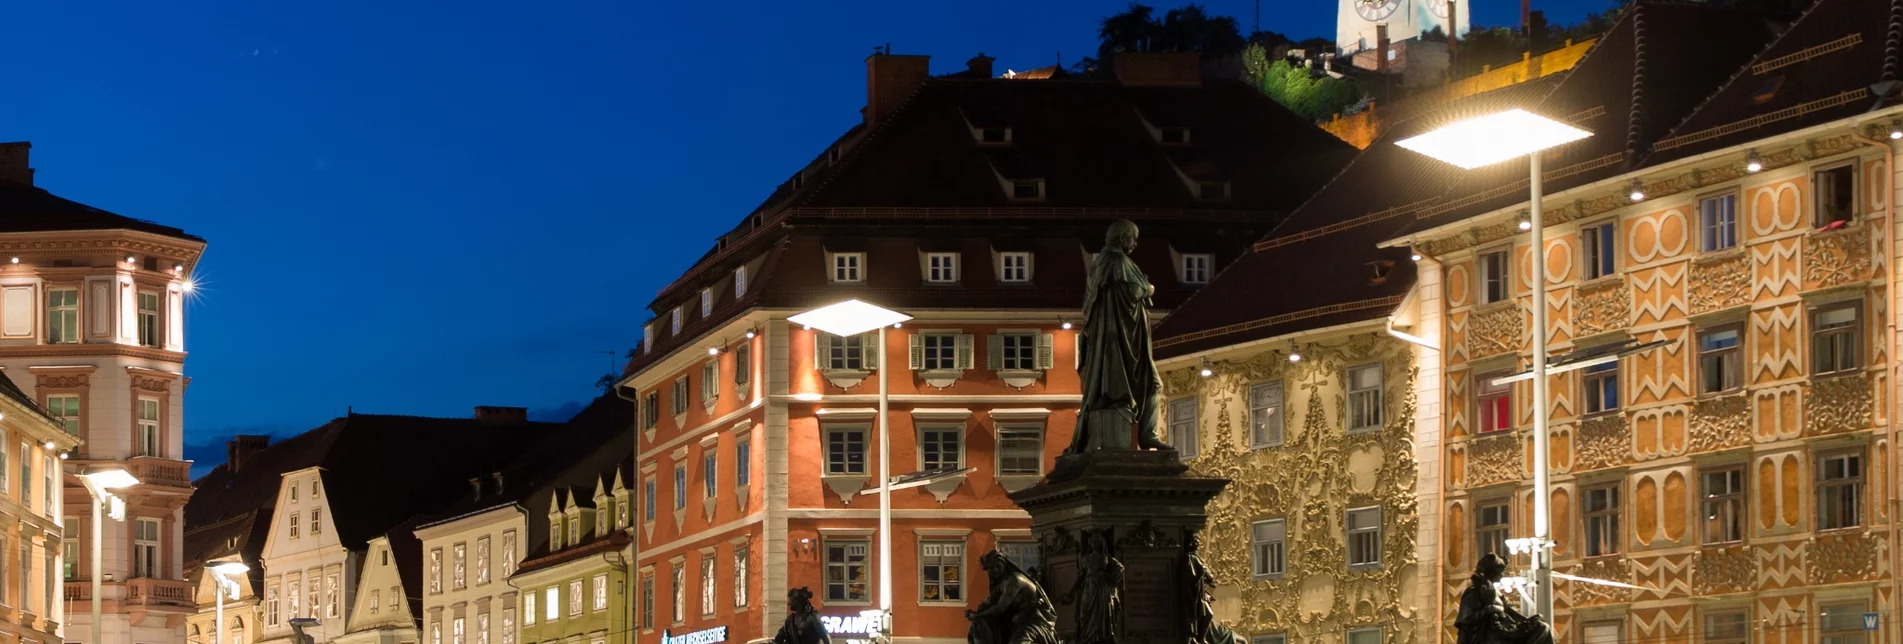 Stadtrundgang Altstadtrunde durchs Weltkulturerbe Graz - Touren-Impression #1 | © Graztourismus - Harry Schiffer